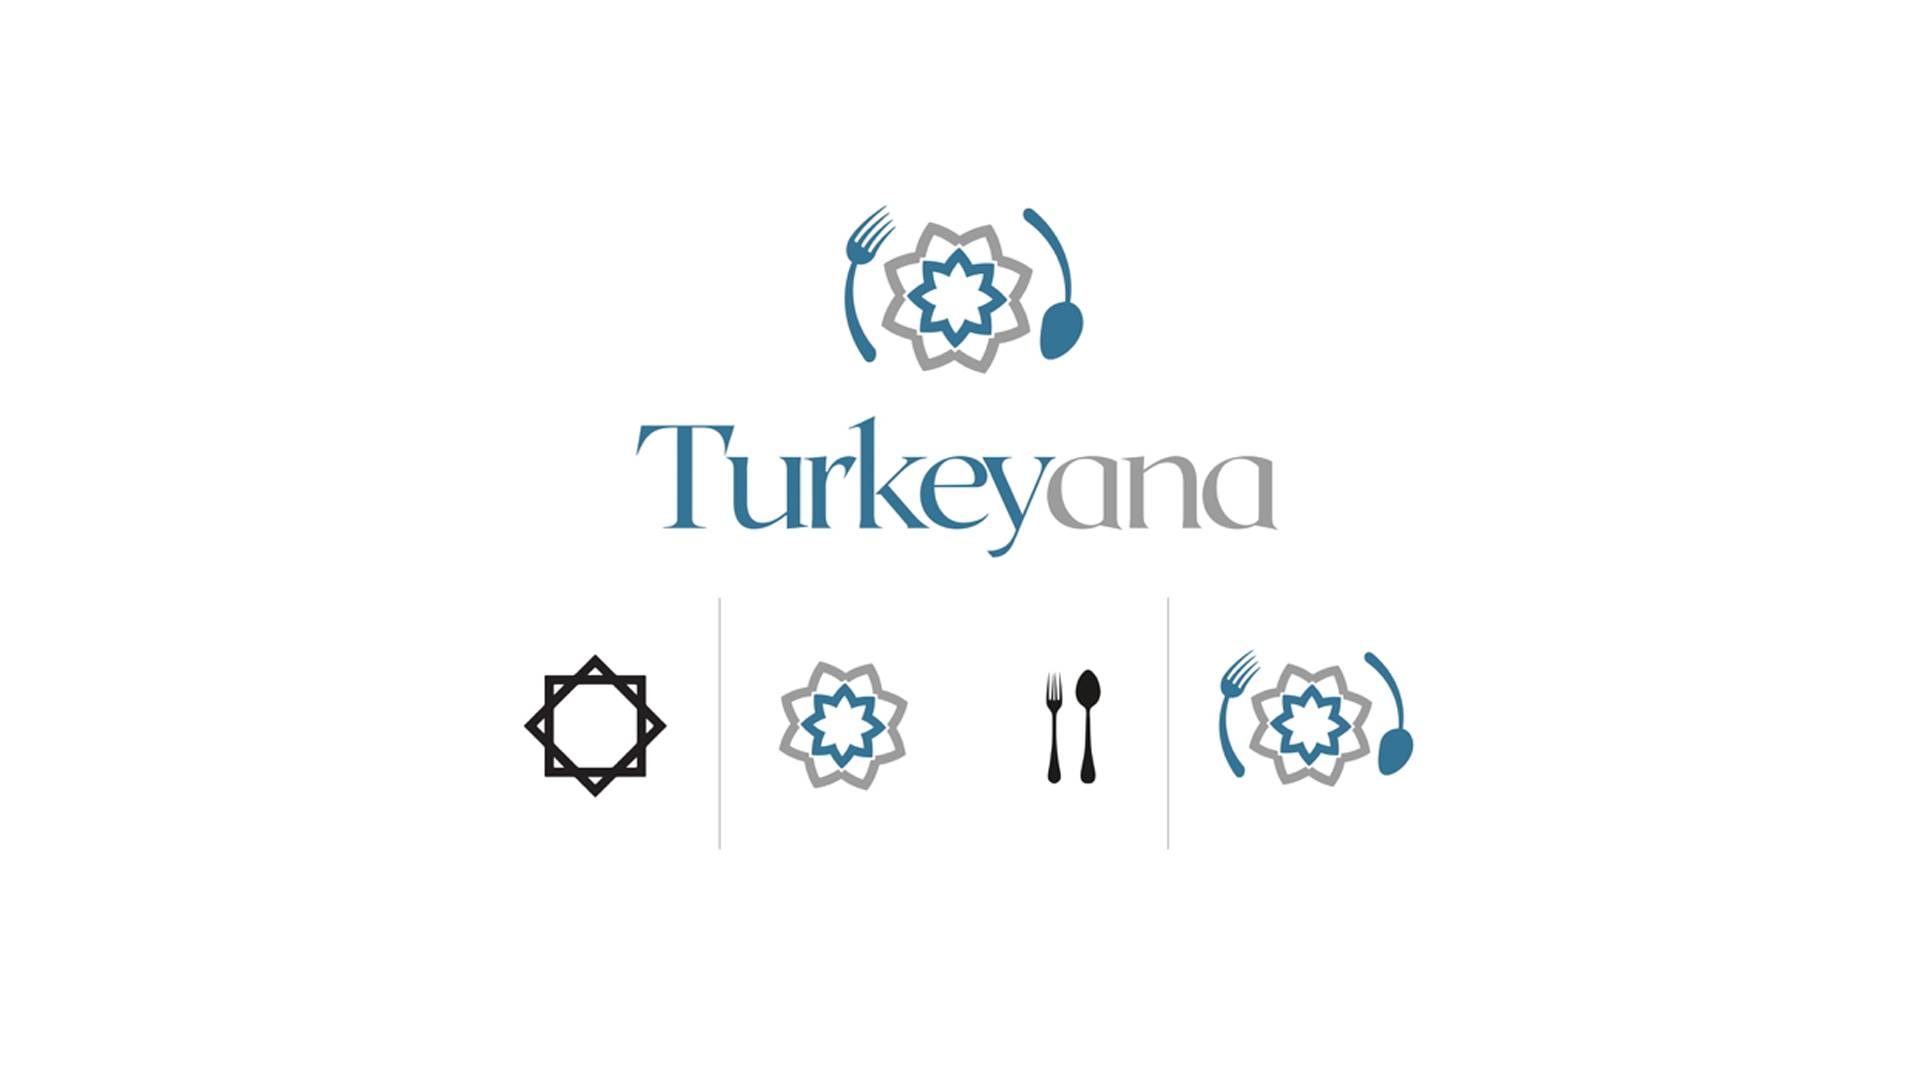 Turkeyana Restaurant